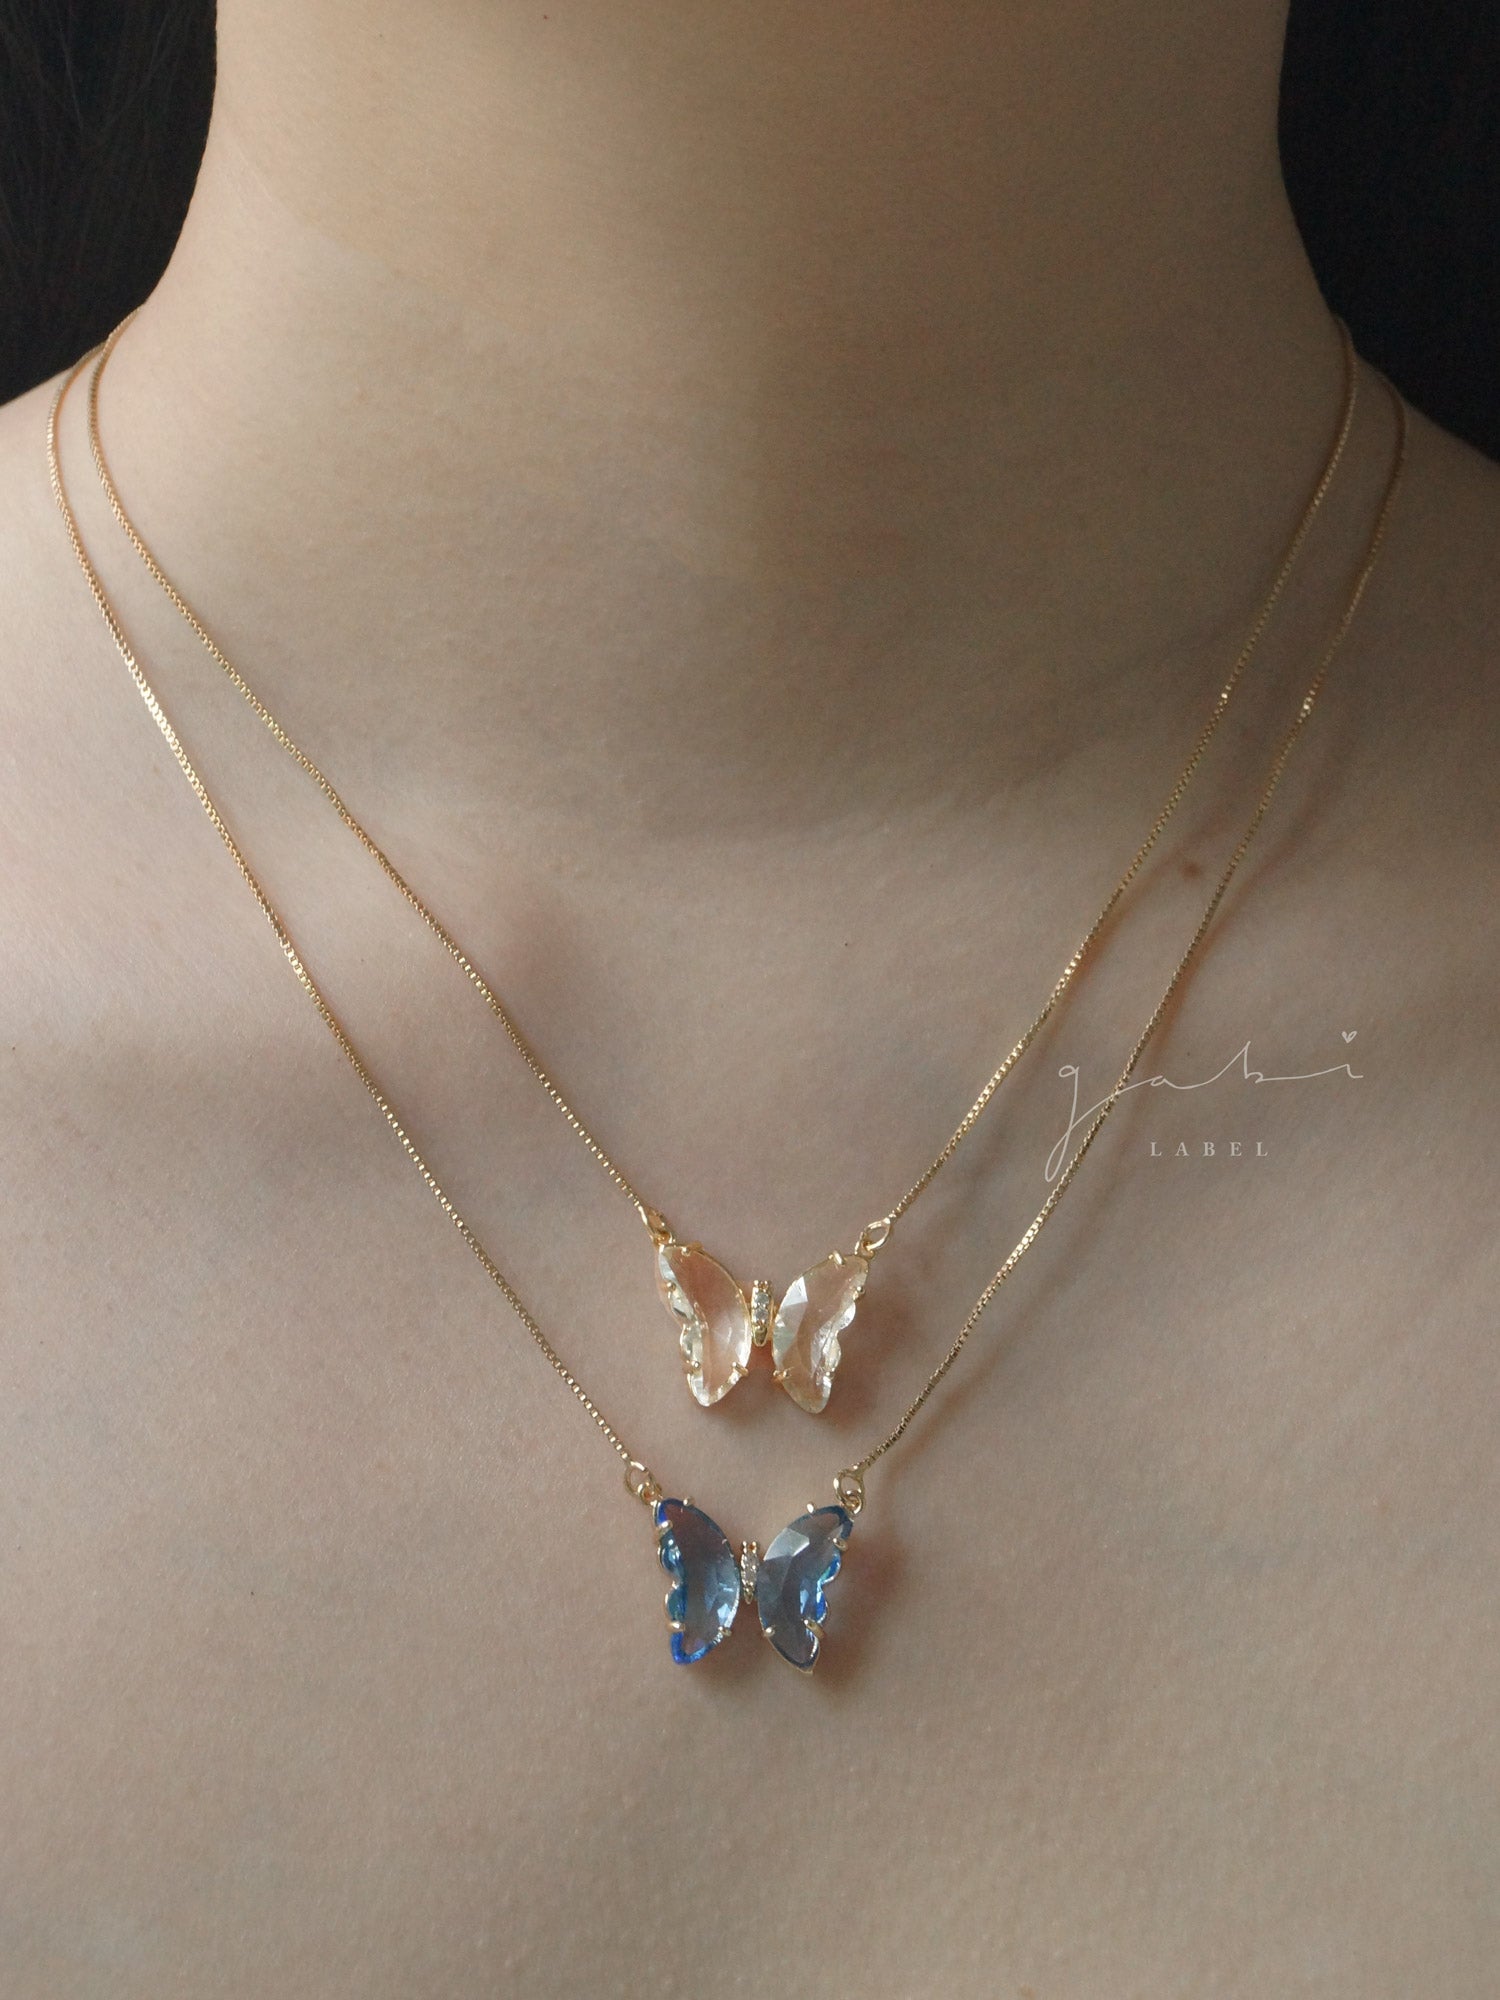 Collier papillon en cristal - Bleu bleuet *Plaqué or 14 carats